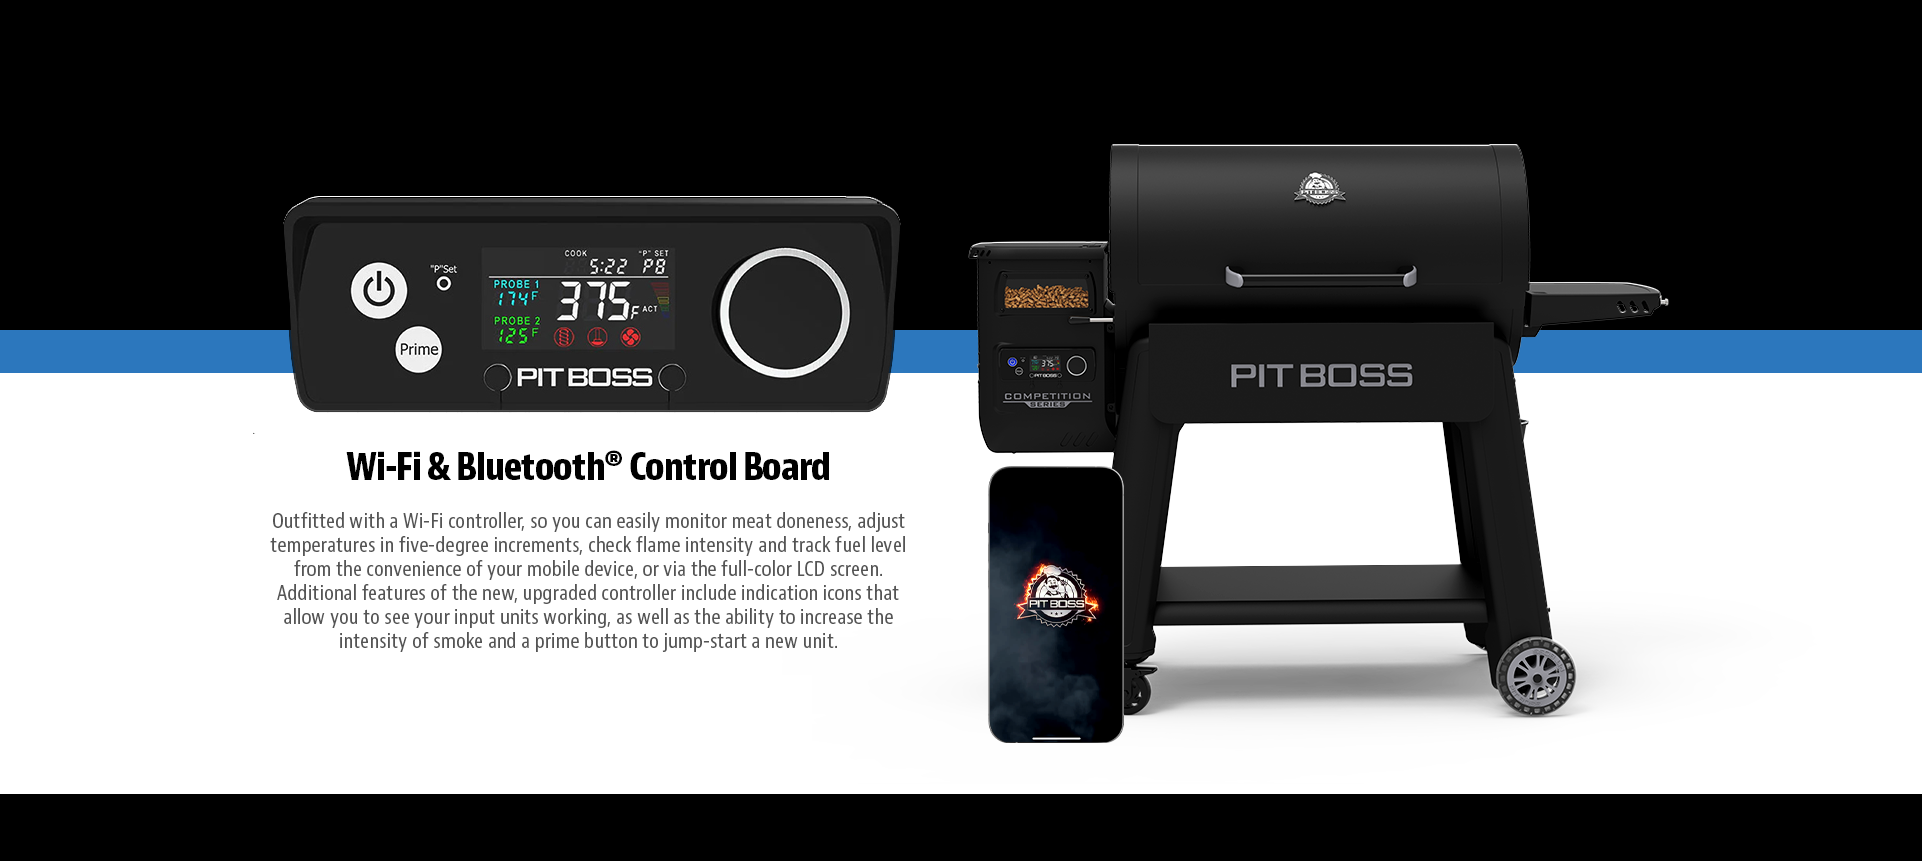 WIfi & Bluetooth Control Board DeskTop